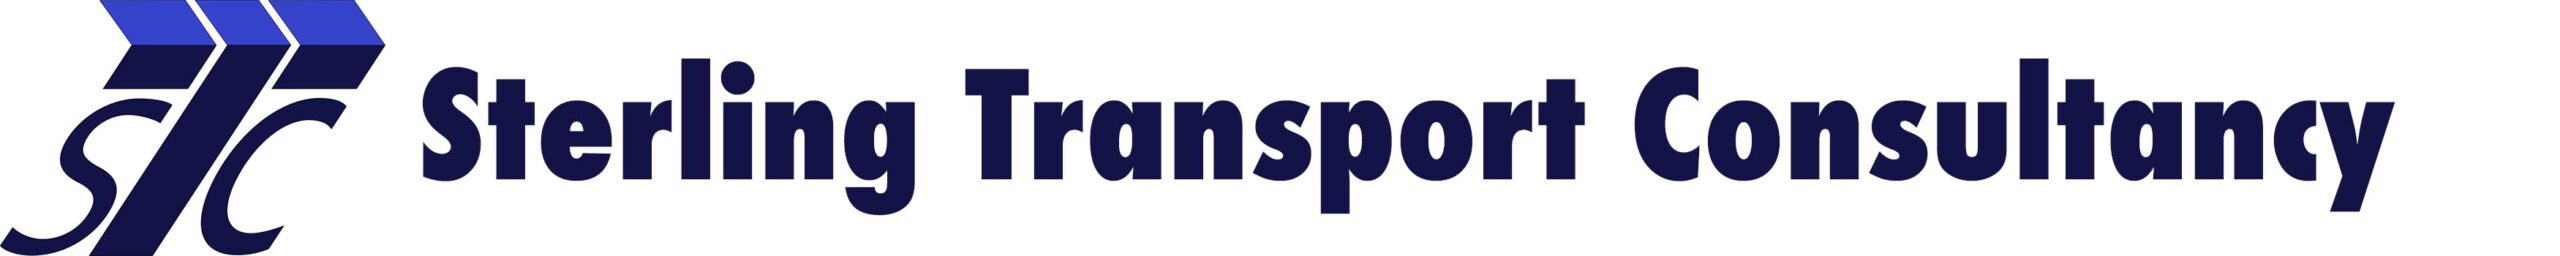 Sterling Transport Consultancy logo